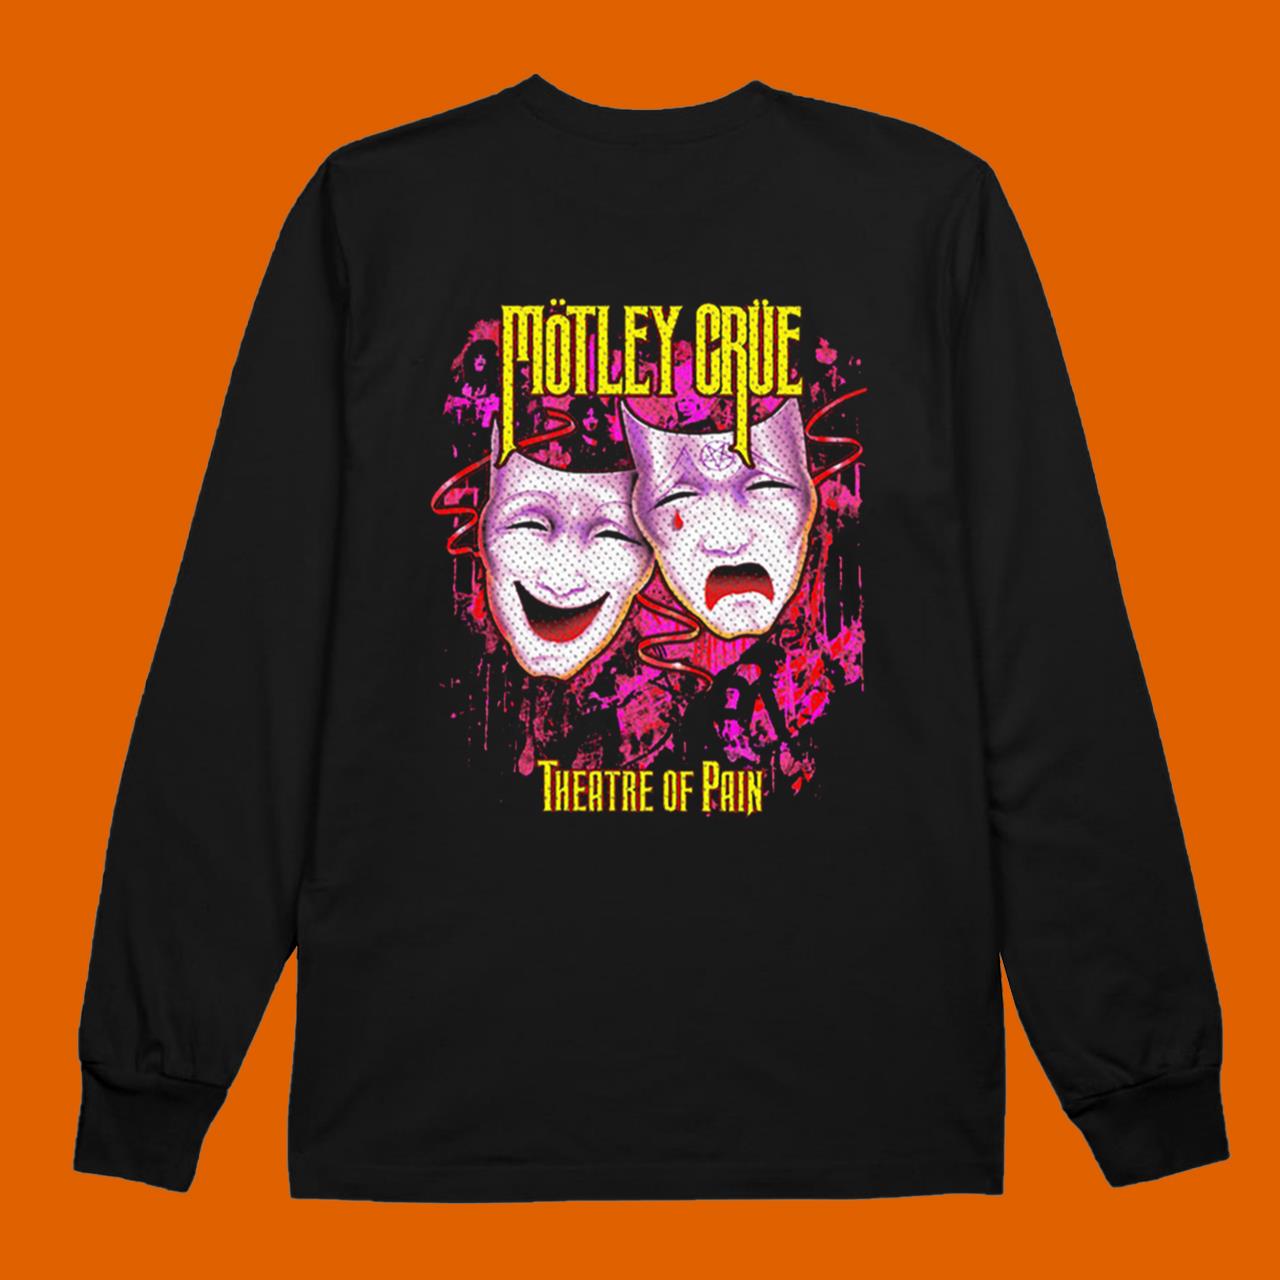 Motley Crue Two-Faced T-Shirt